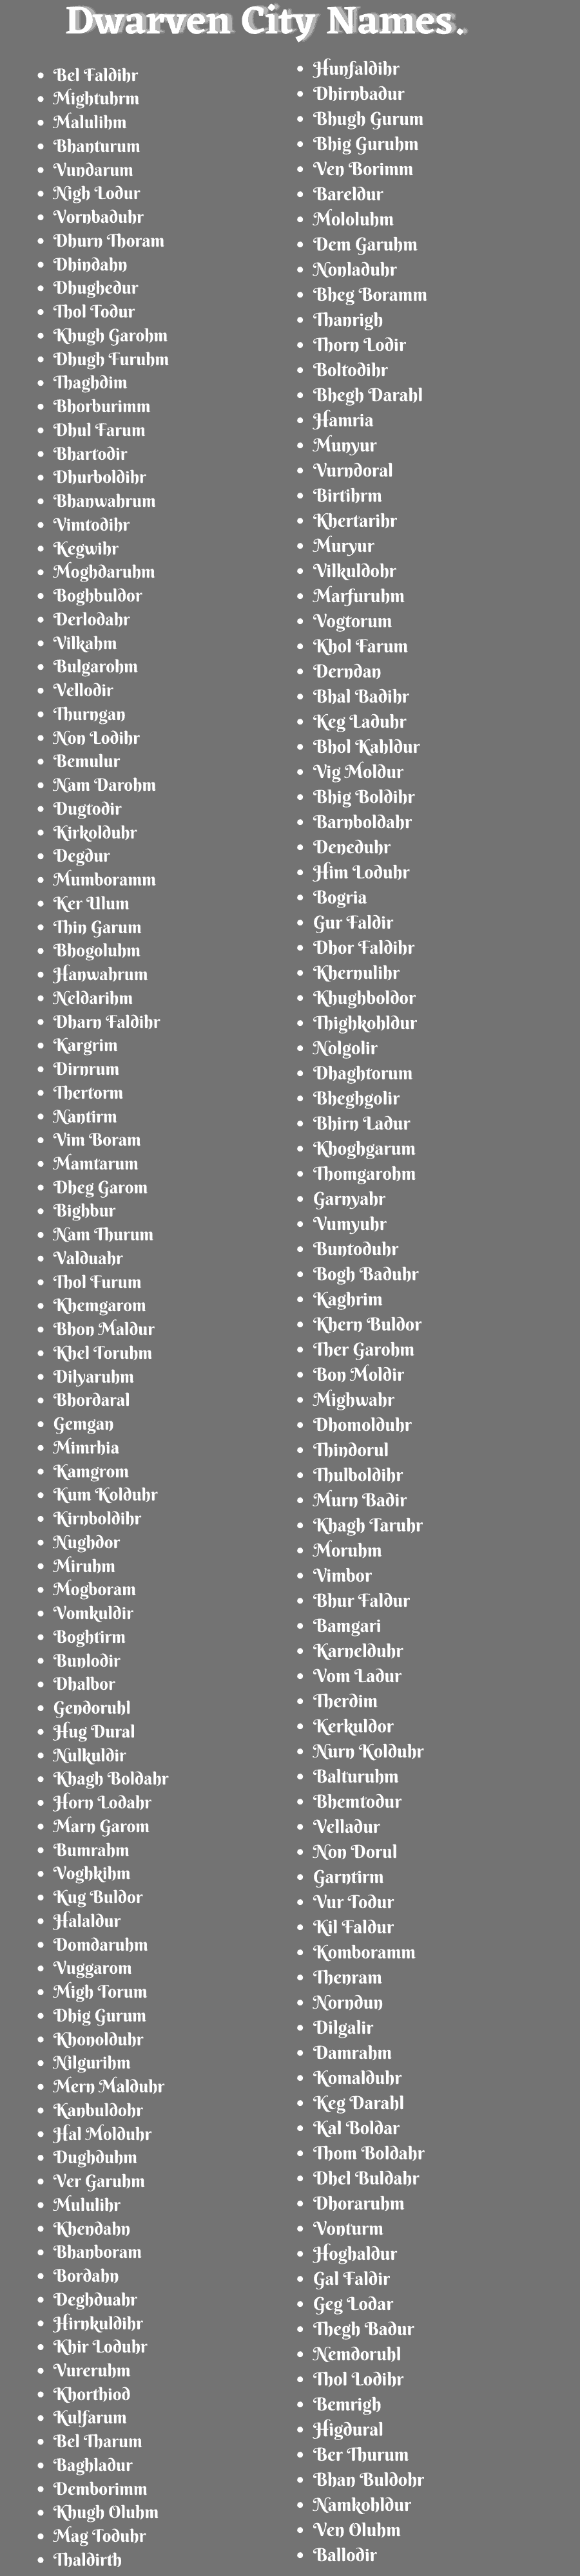 Dwarven City Names